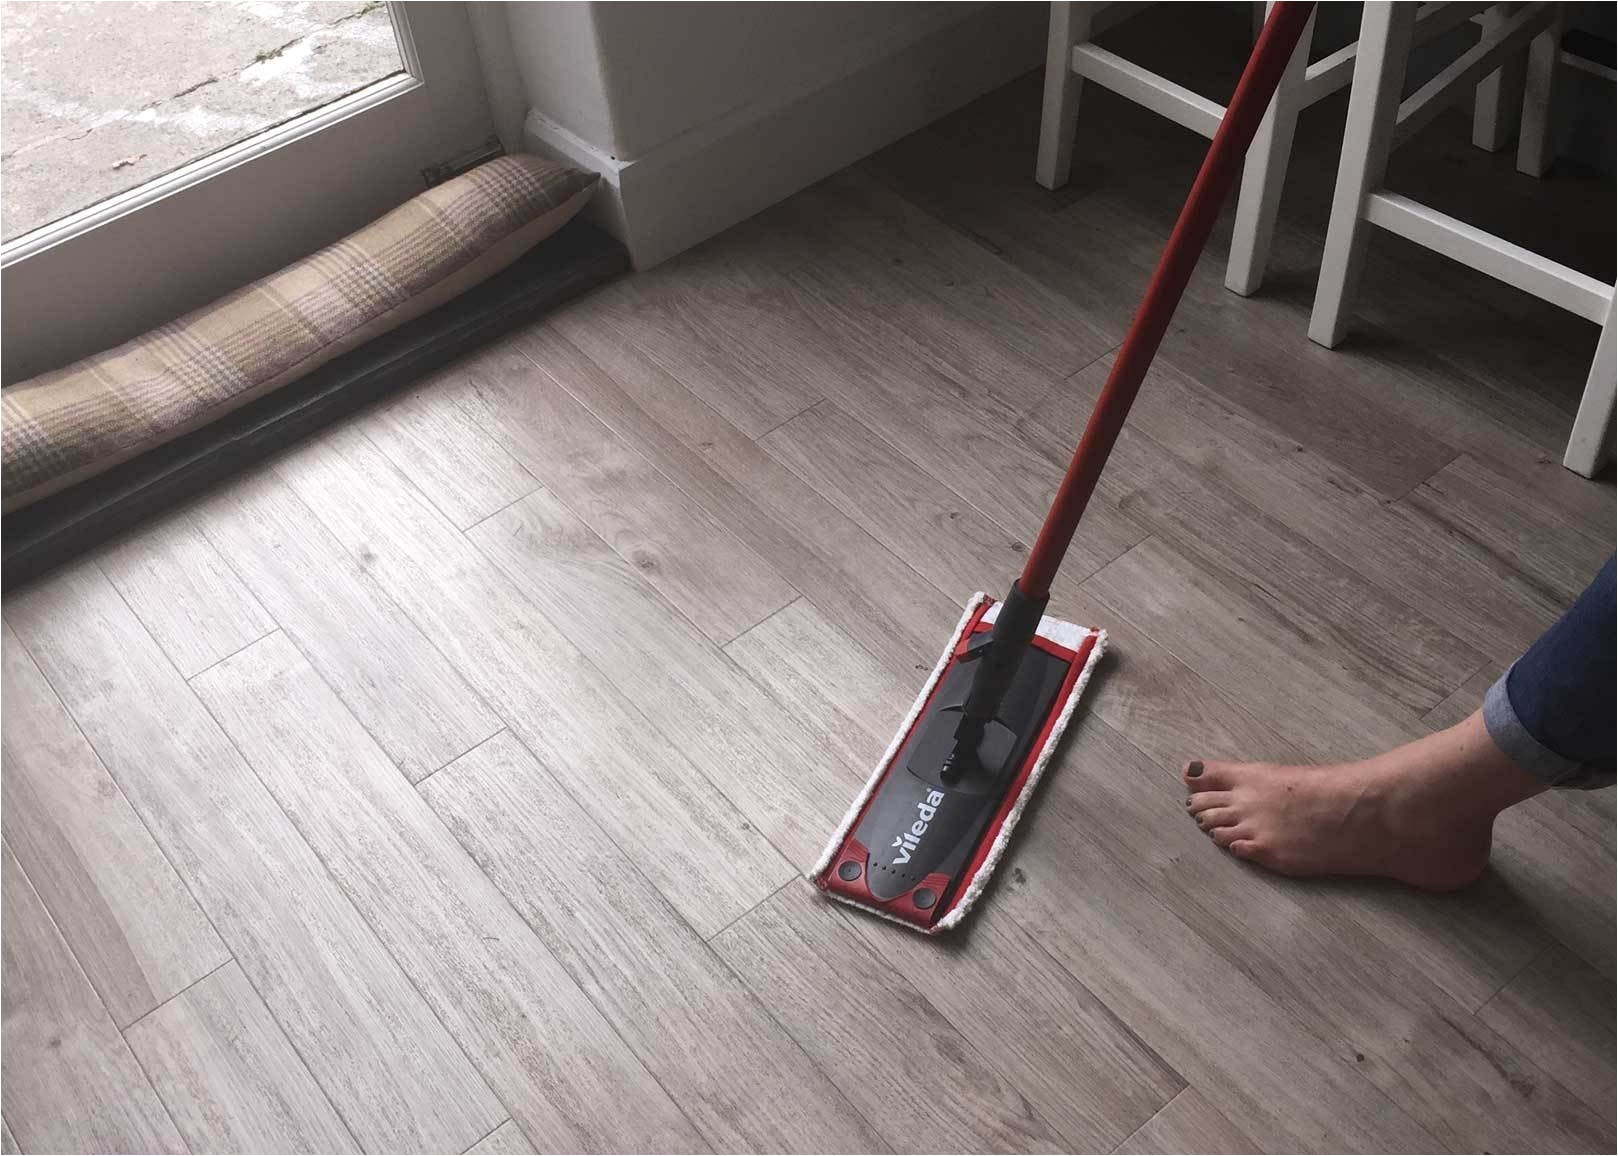 Best Type Of Mop to Clean Hardwood Floors 20 Best Of Best Steam Mop for Wood Floors Accroalamode